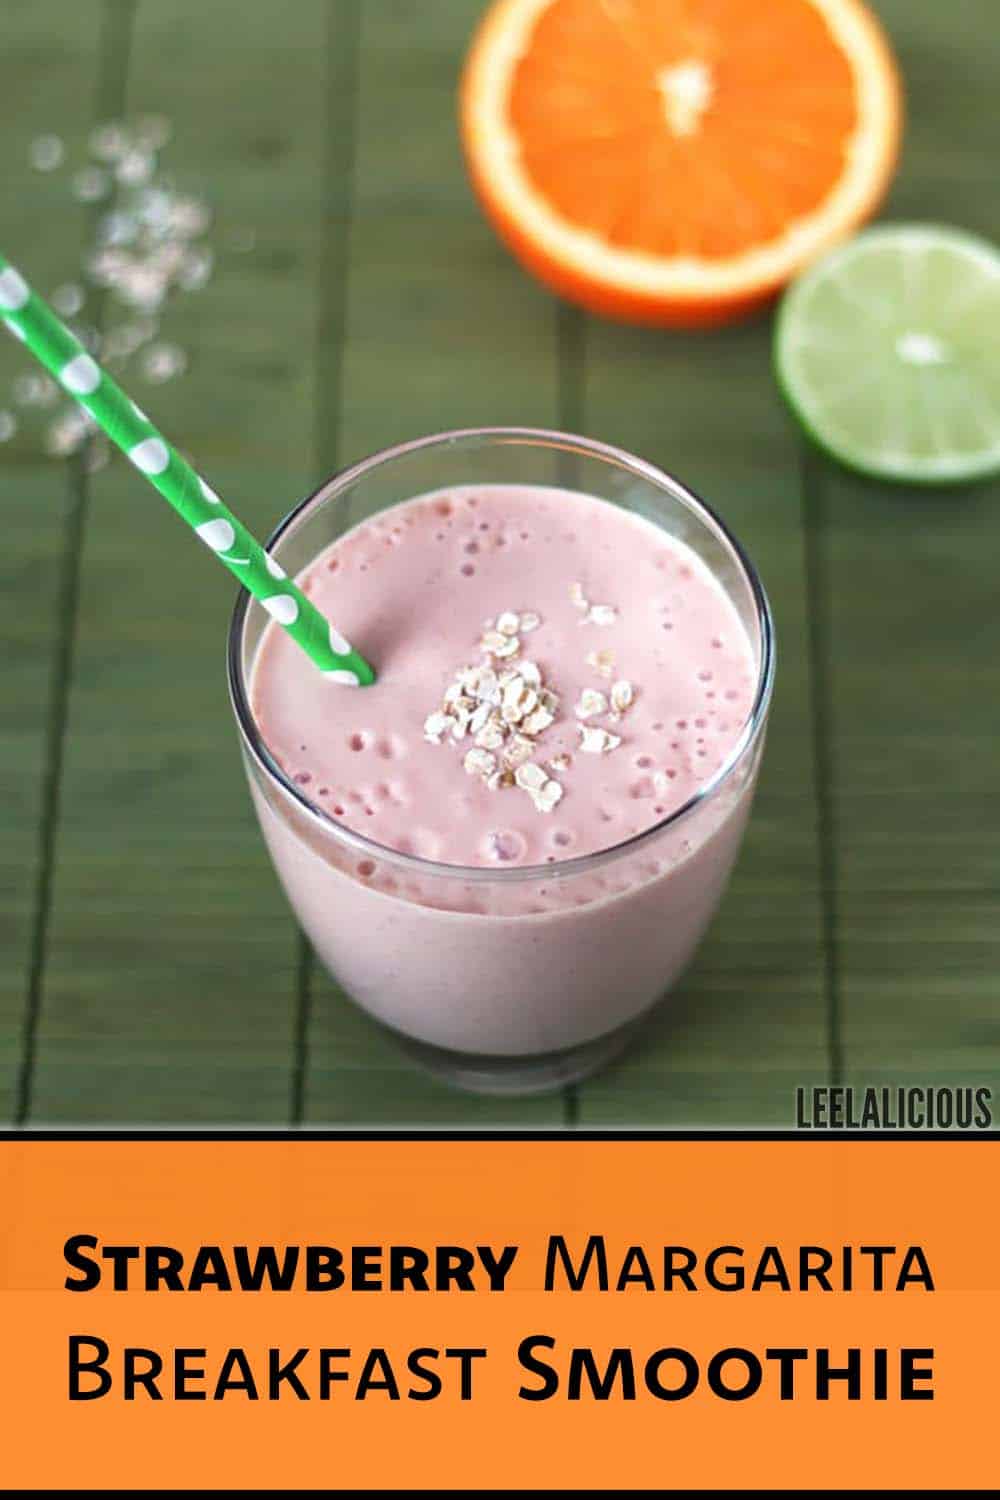 Strawberry Margarita Breakfast Smoothie Recipe » LeelaLicious